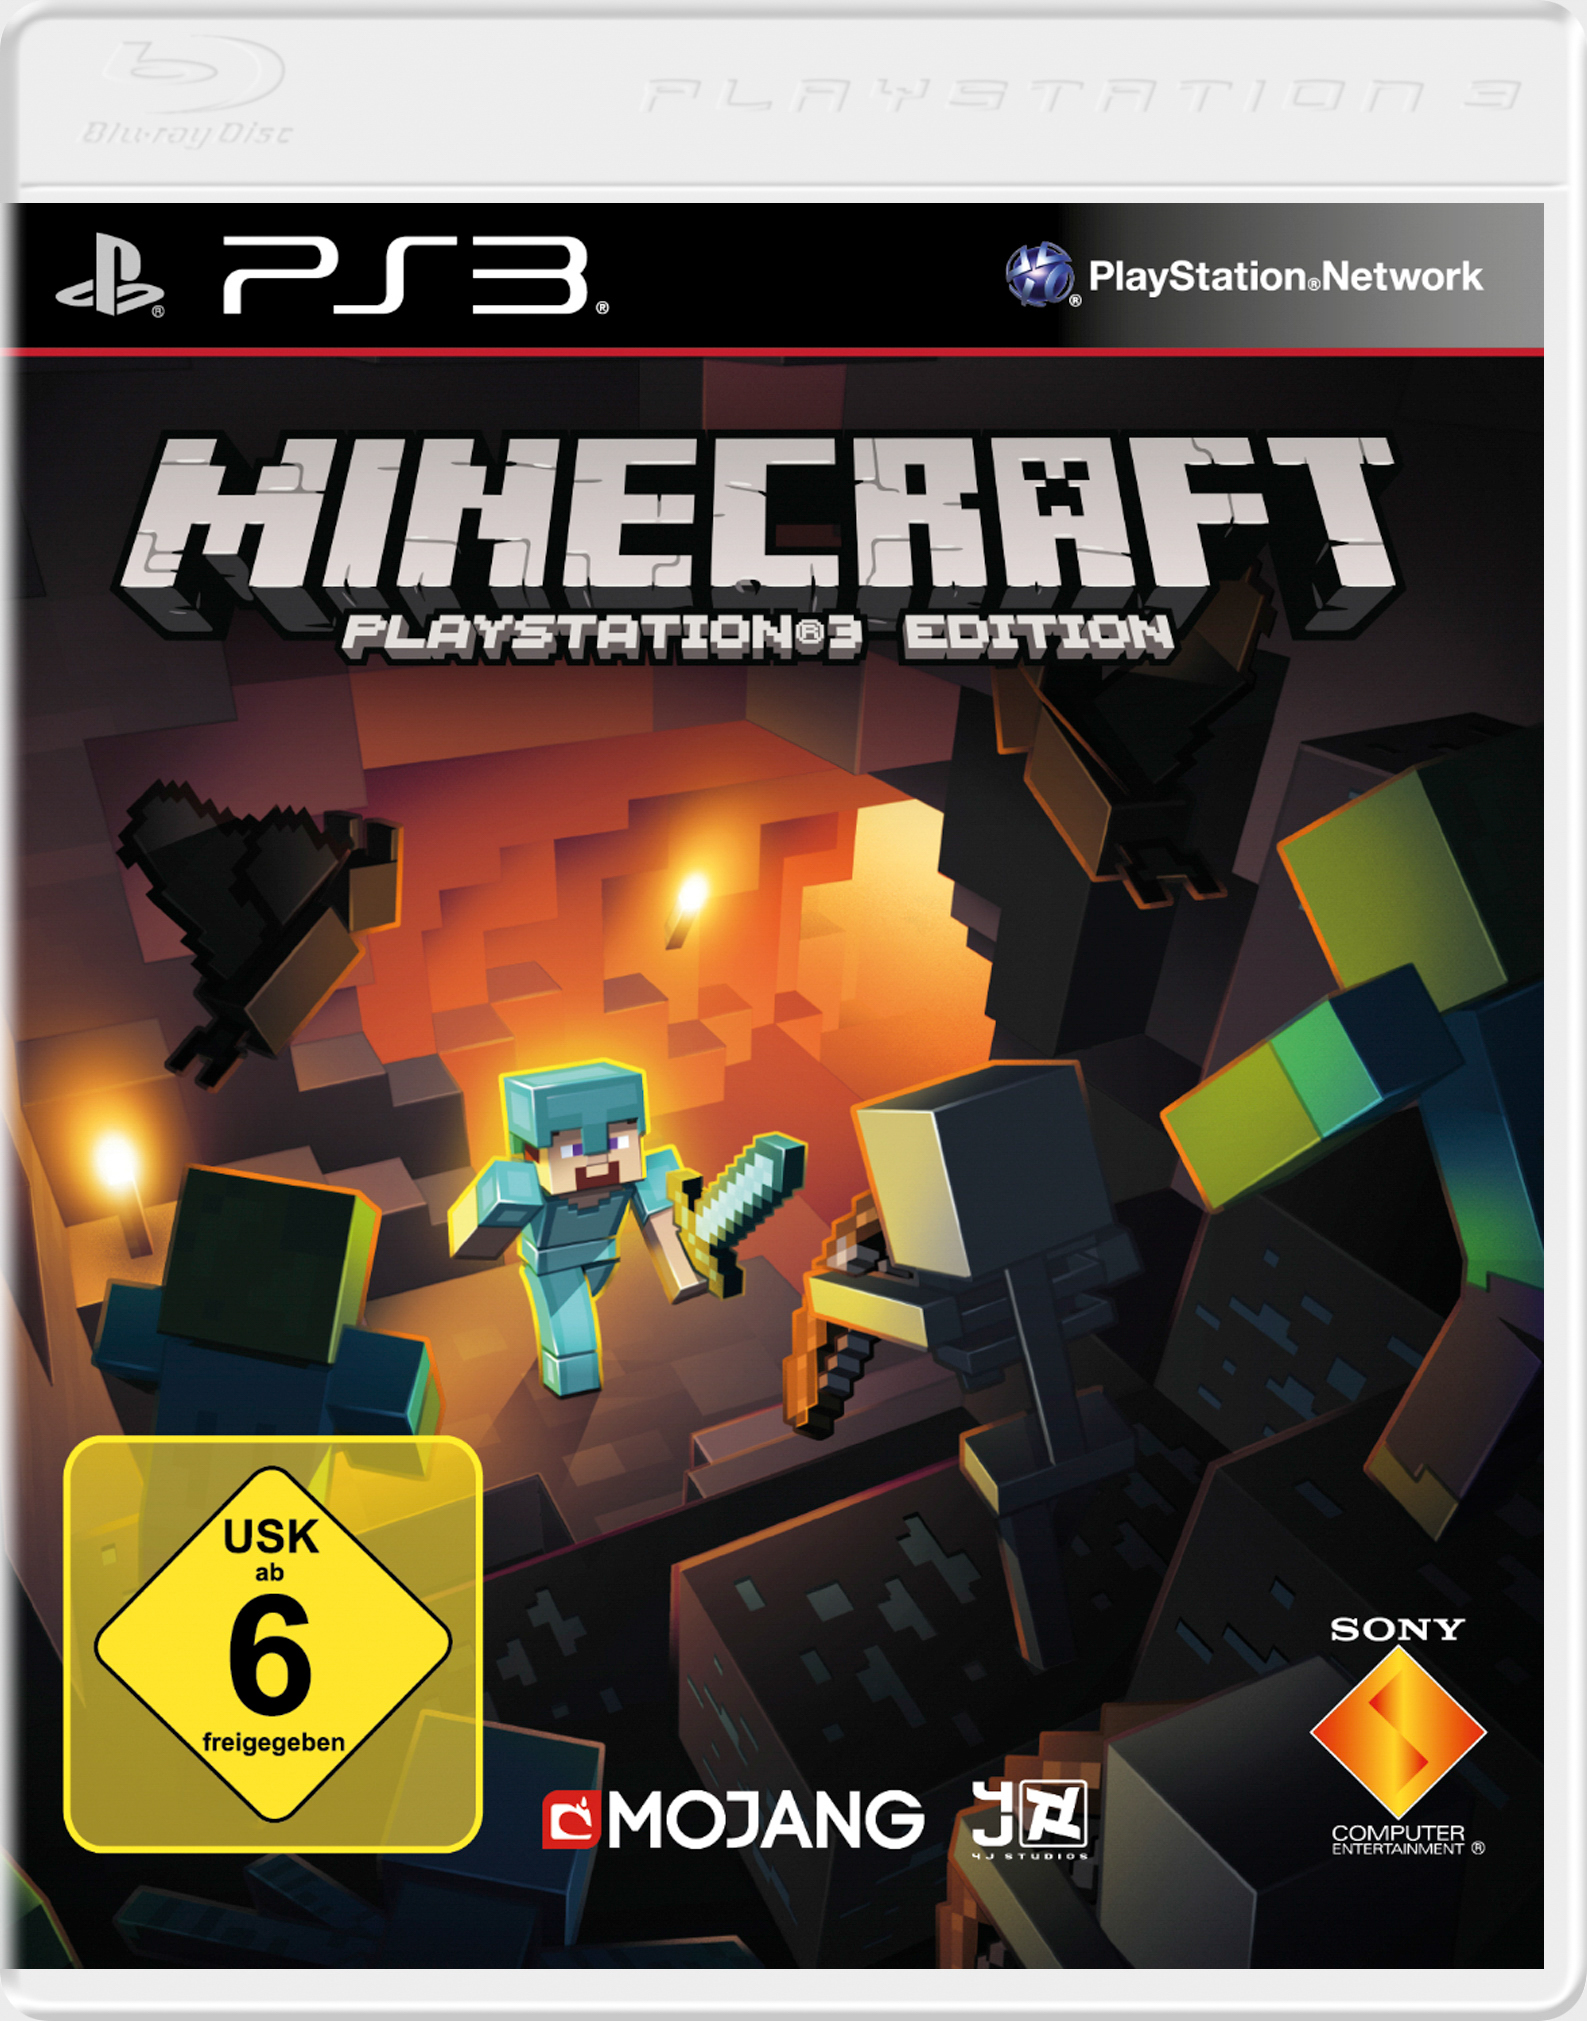 Edition [PlayStation PlayStation - 3] 3 Minecraft